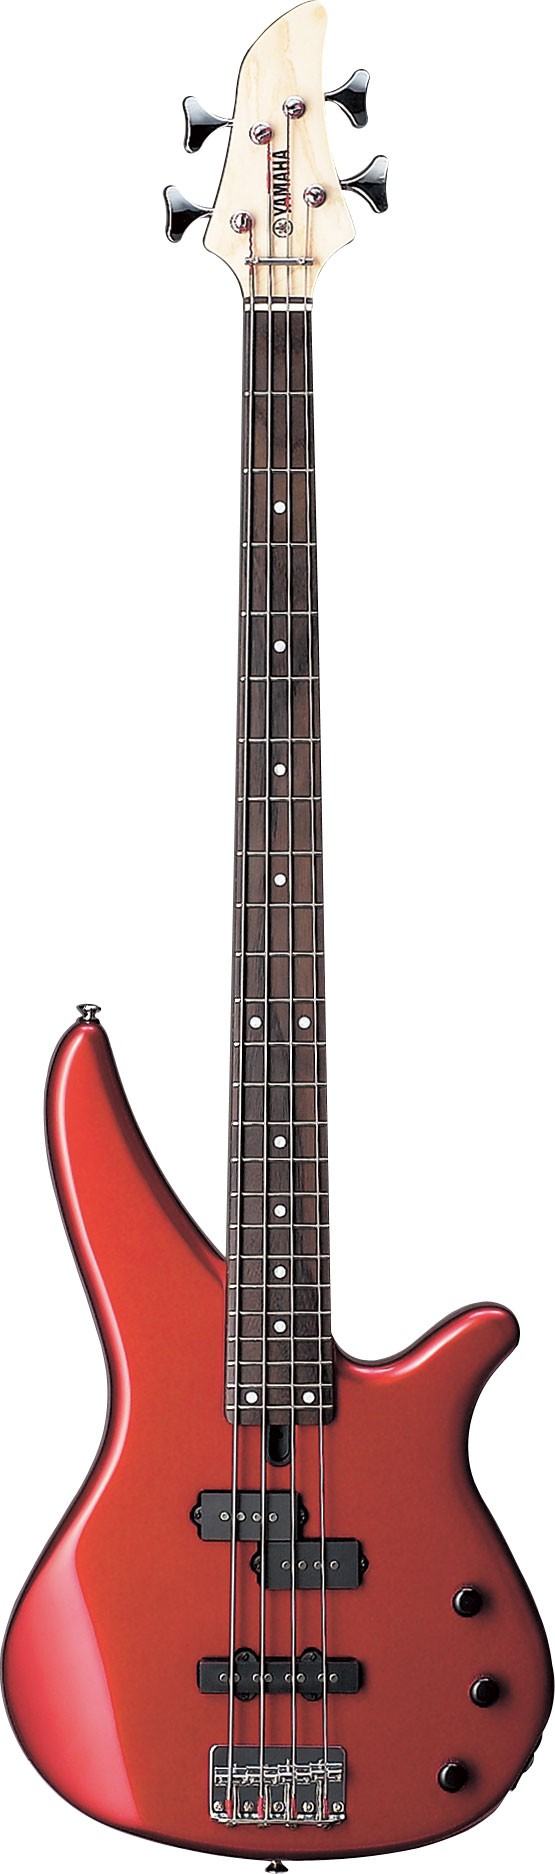 Yamaha RBX170 four string bass